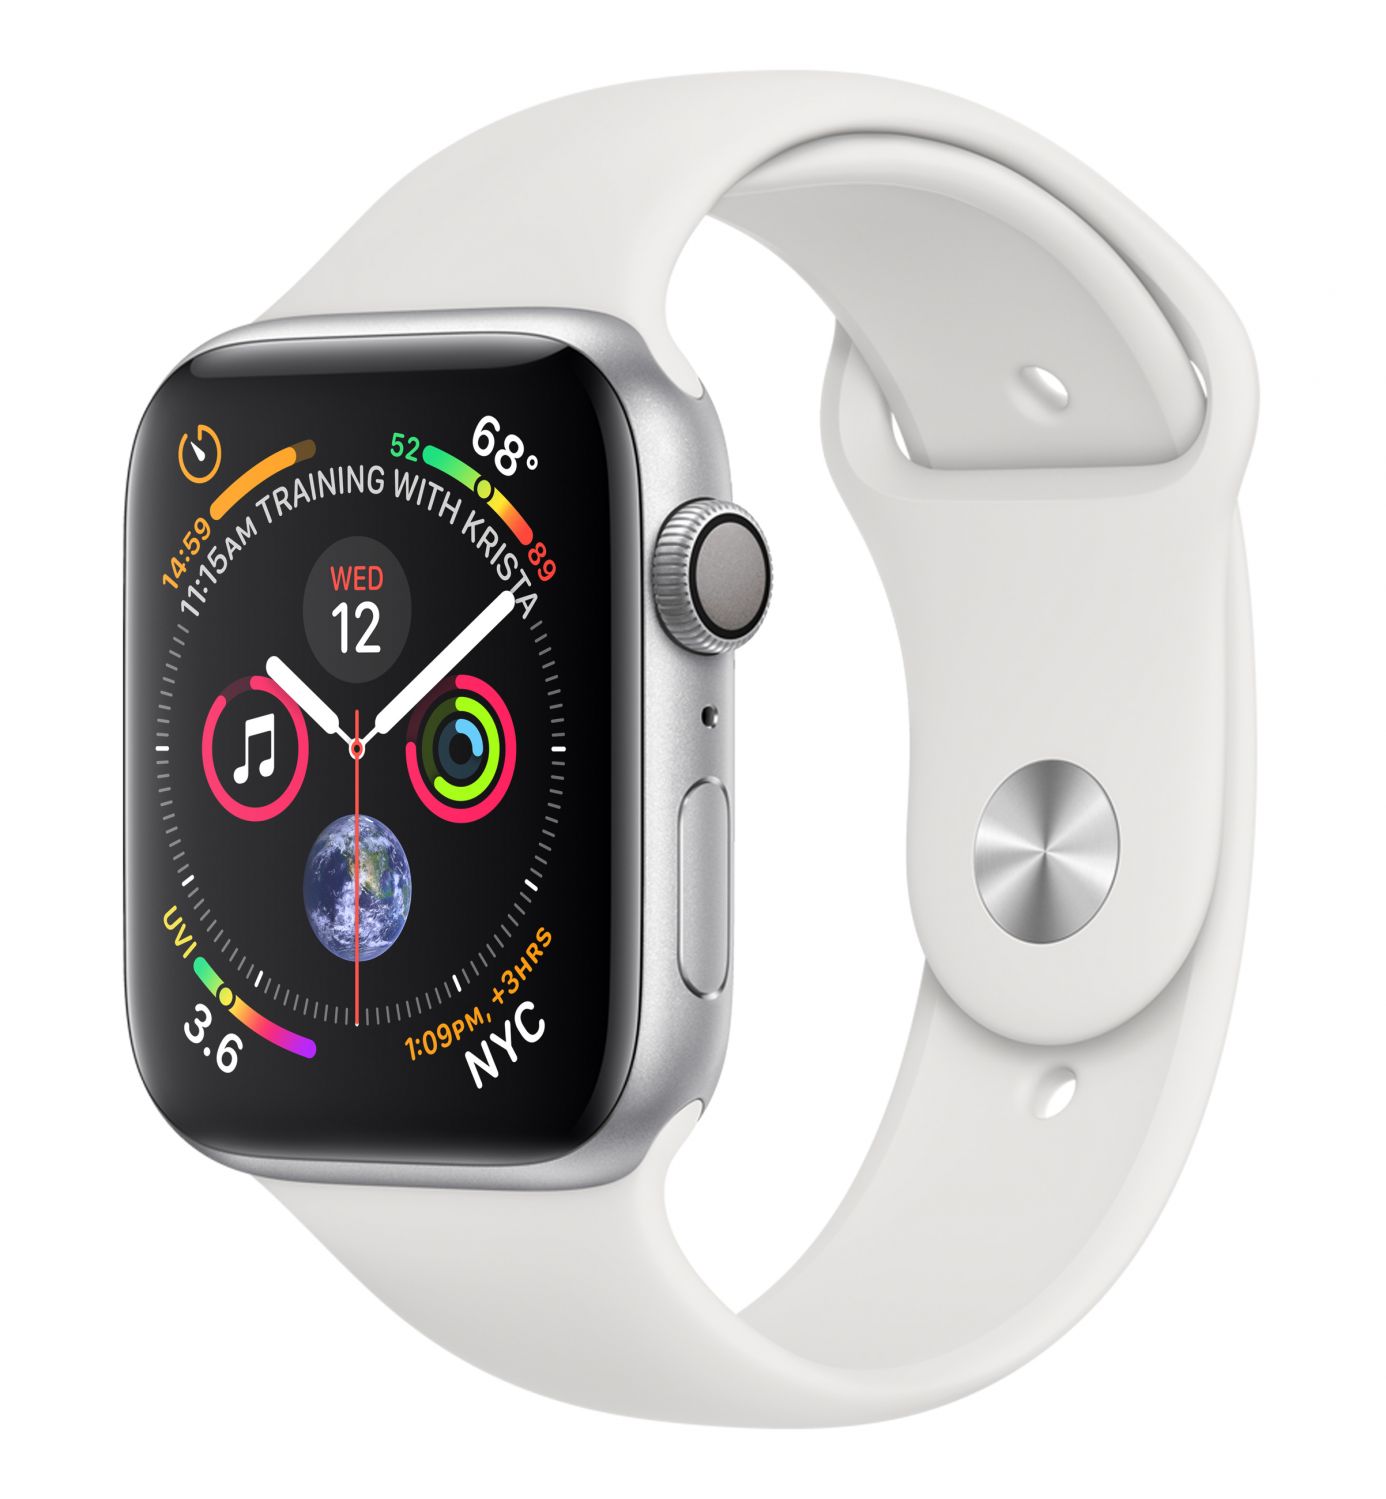 MU6A2TY/A - Reloj inteligent Apple Watch Seri 4 reloj inteligente Plata OLED GP (satlite)